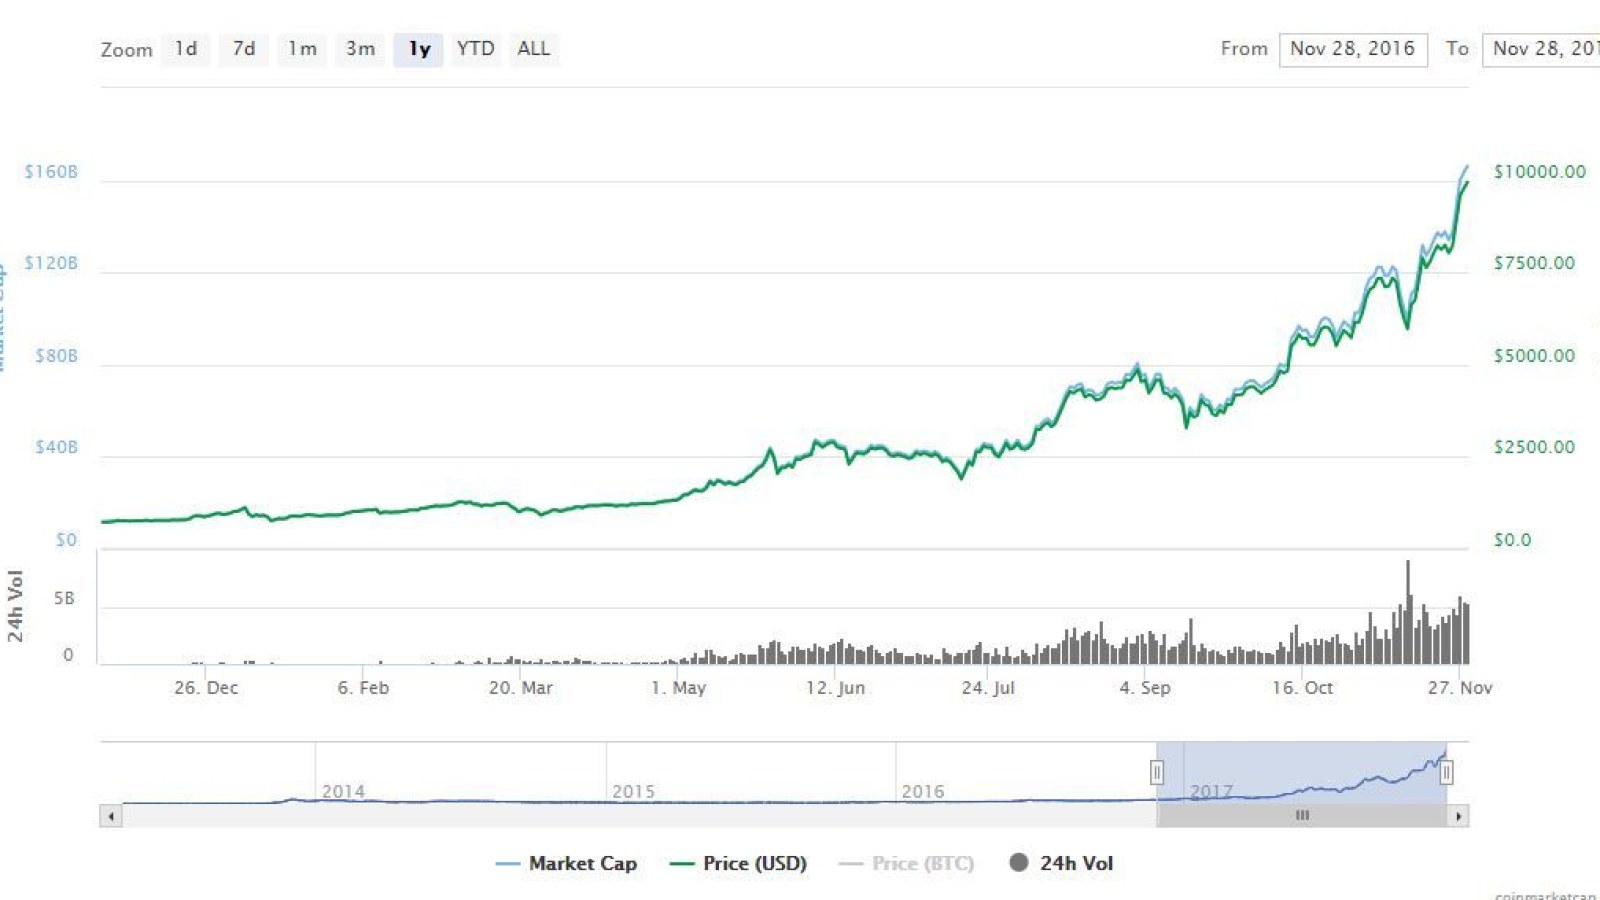 Bitcoin Price Still Cheap At 10 000 Despite Bitcoin Bubble Fears - 